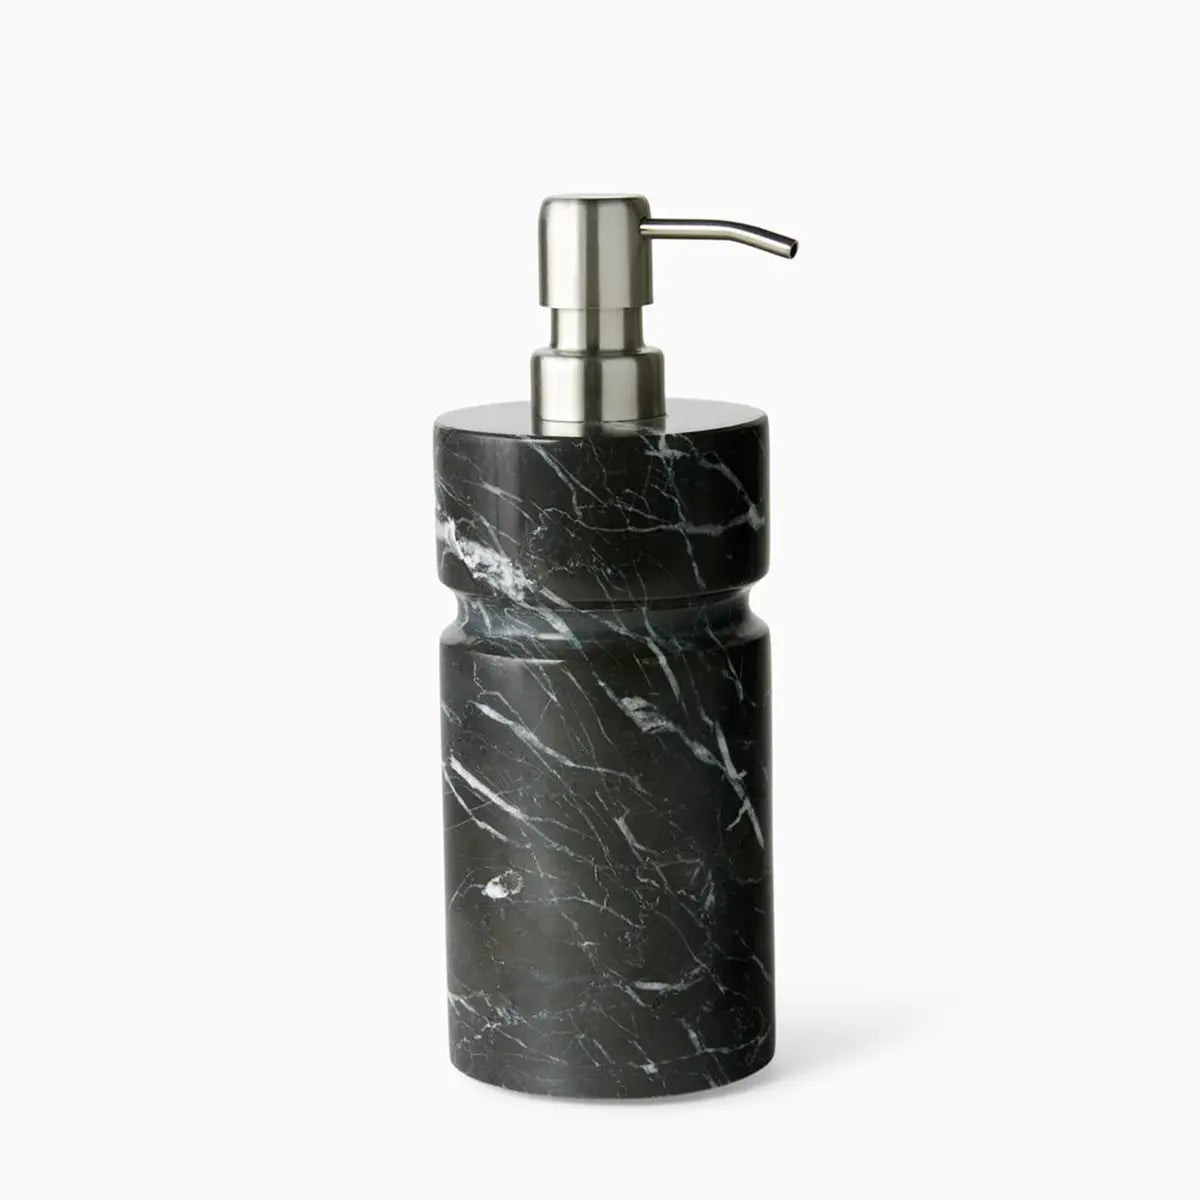 Sferra Marquina Soap Pump in Black Marble